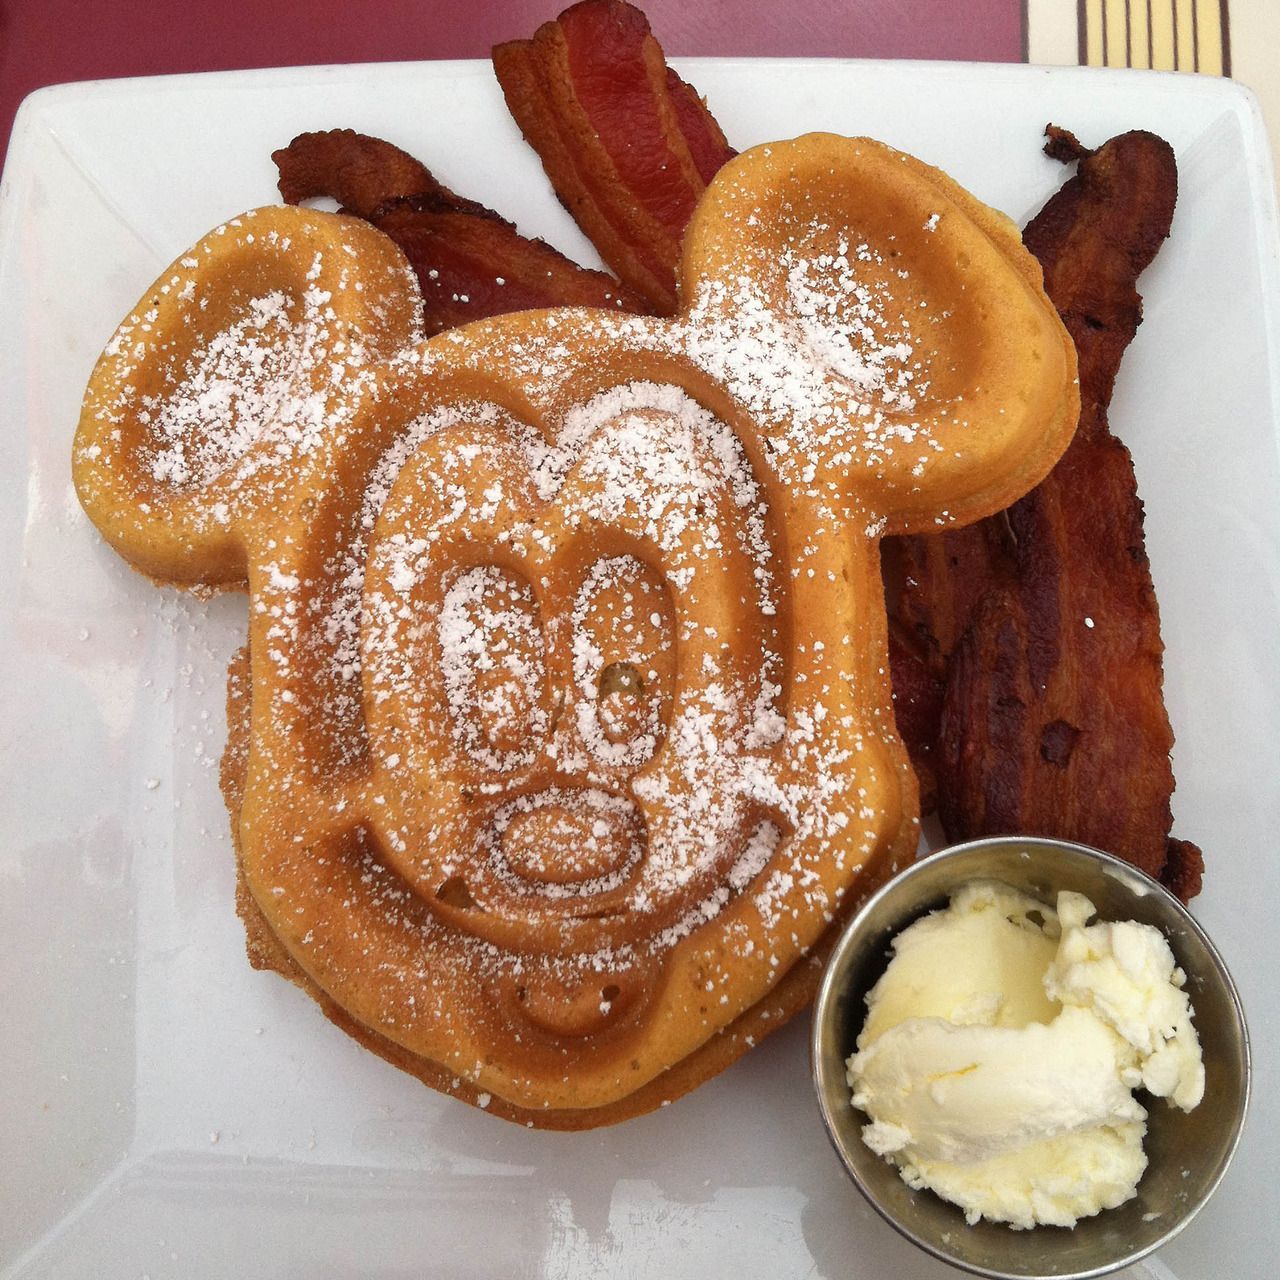 Breakfast at Carnation Cafe #Disneyland #Food